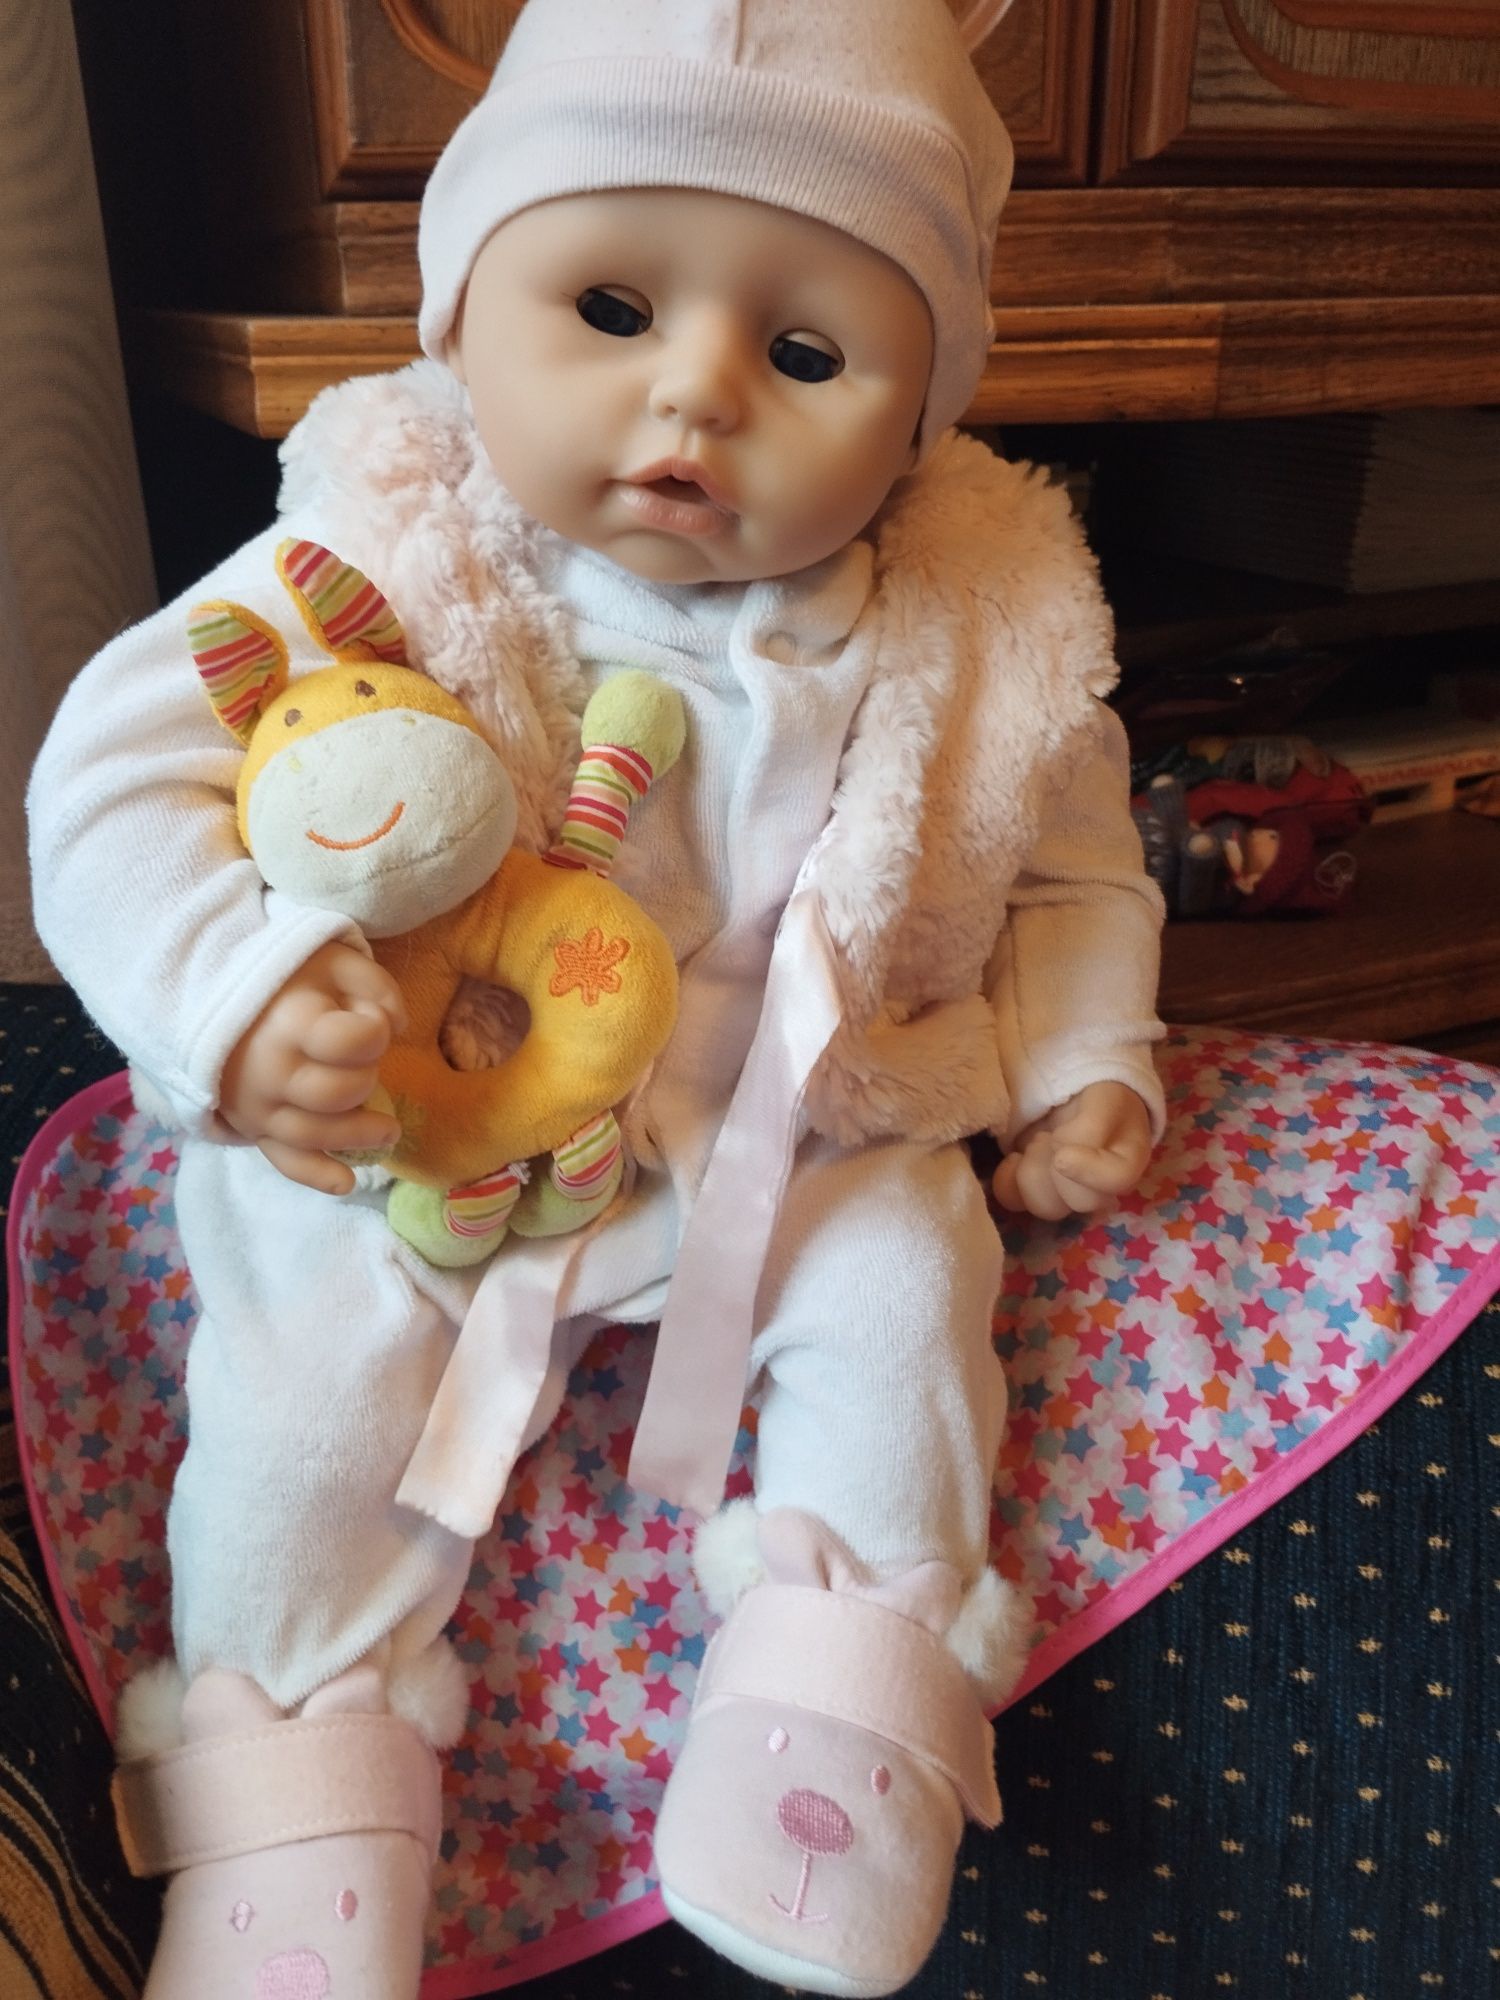 Baby Anaabell interaktywna lalka Zapf Creations.